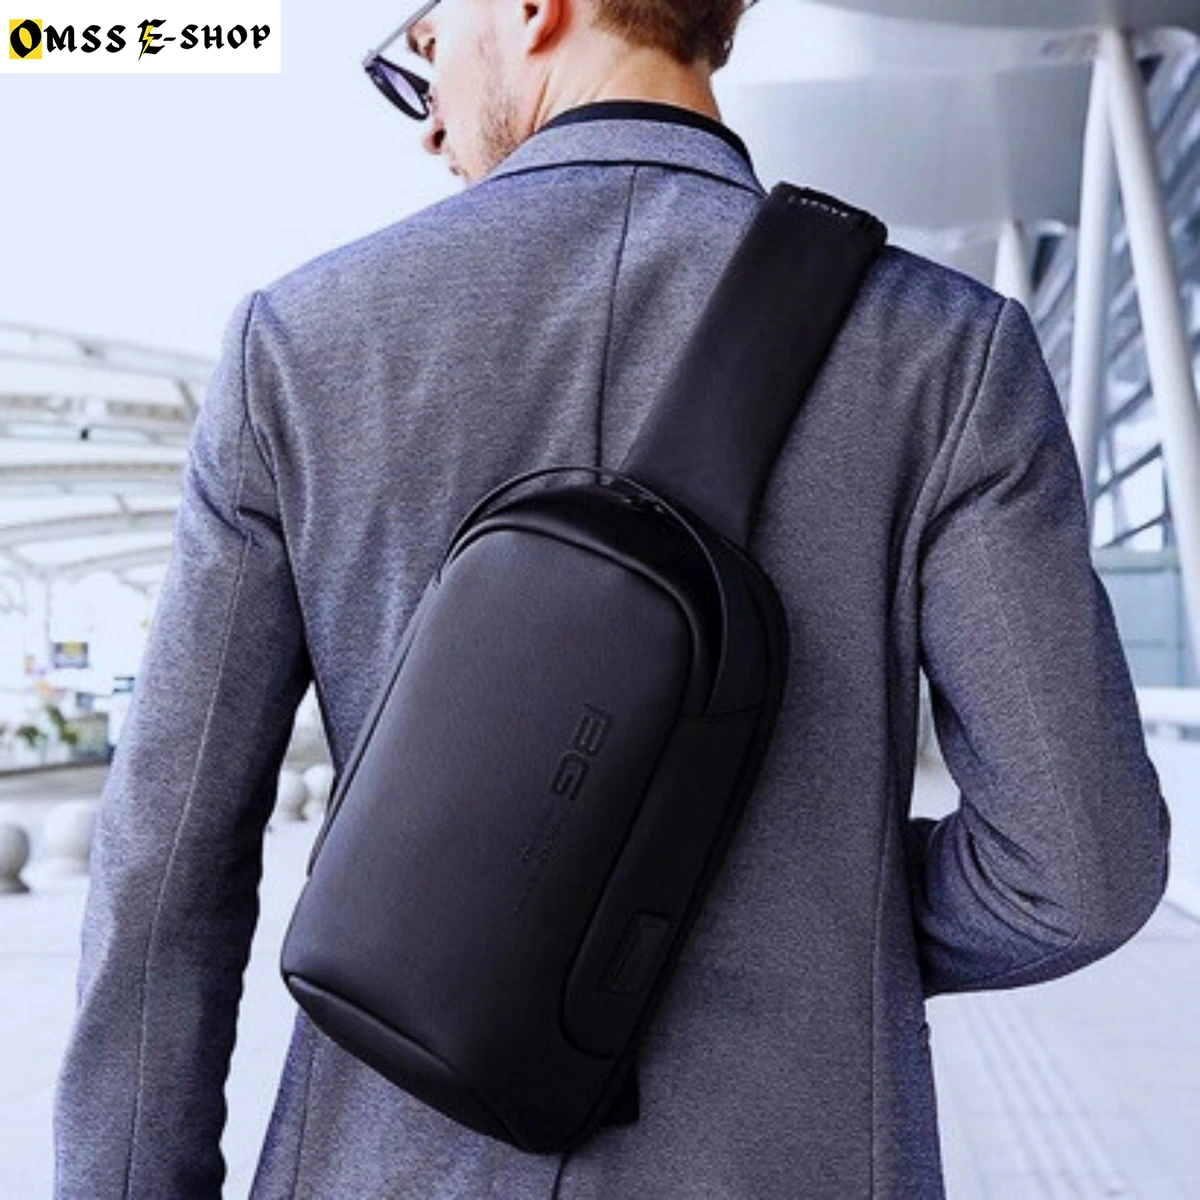 BANGE Unisex Travel Crossbody Sling Bag Chest Pack With USB Charging